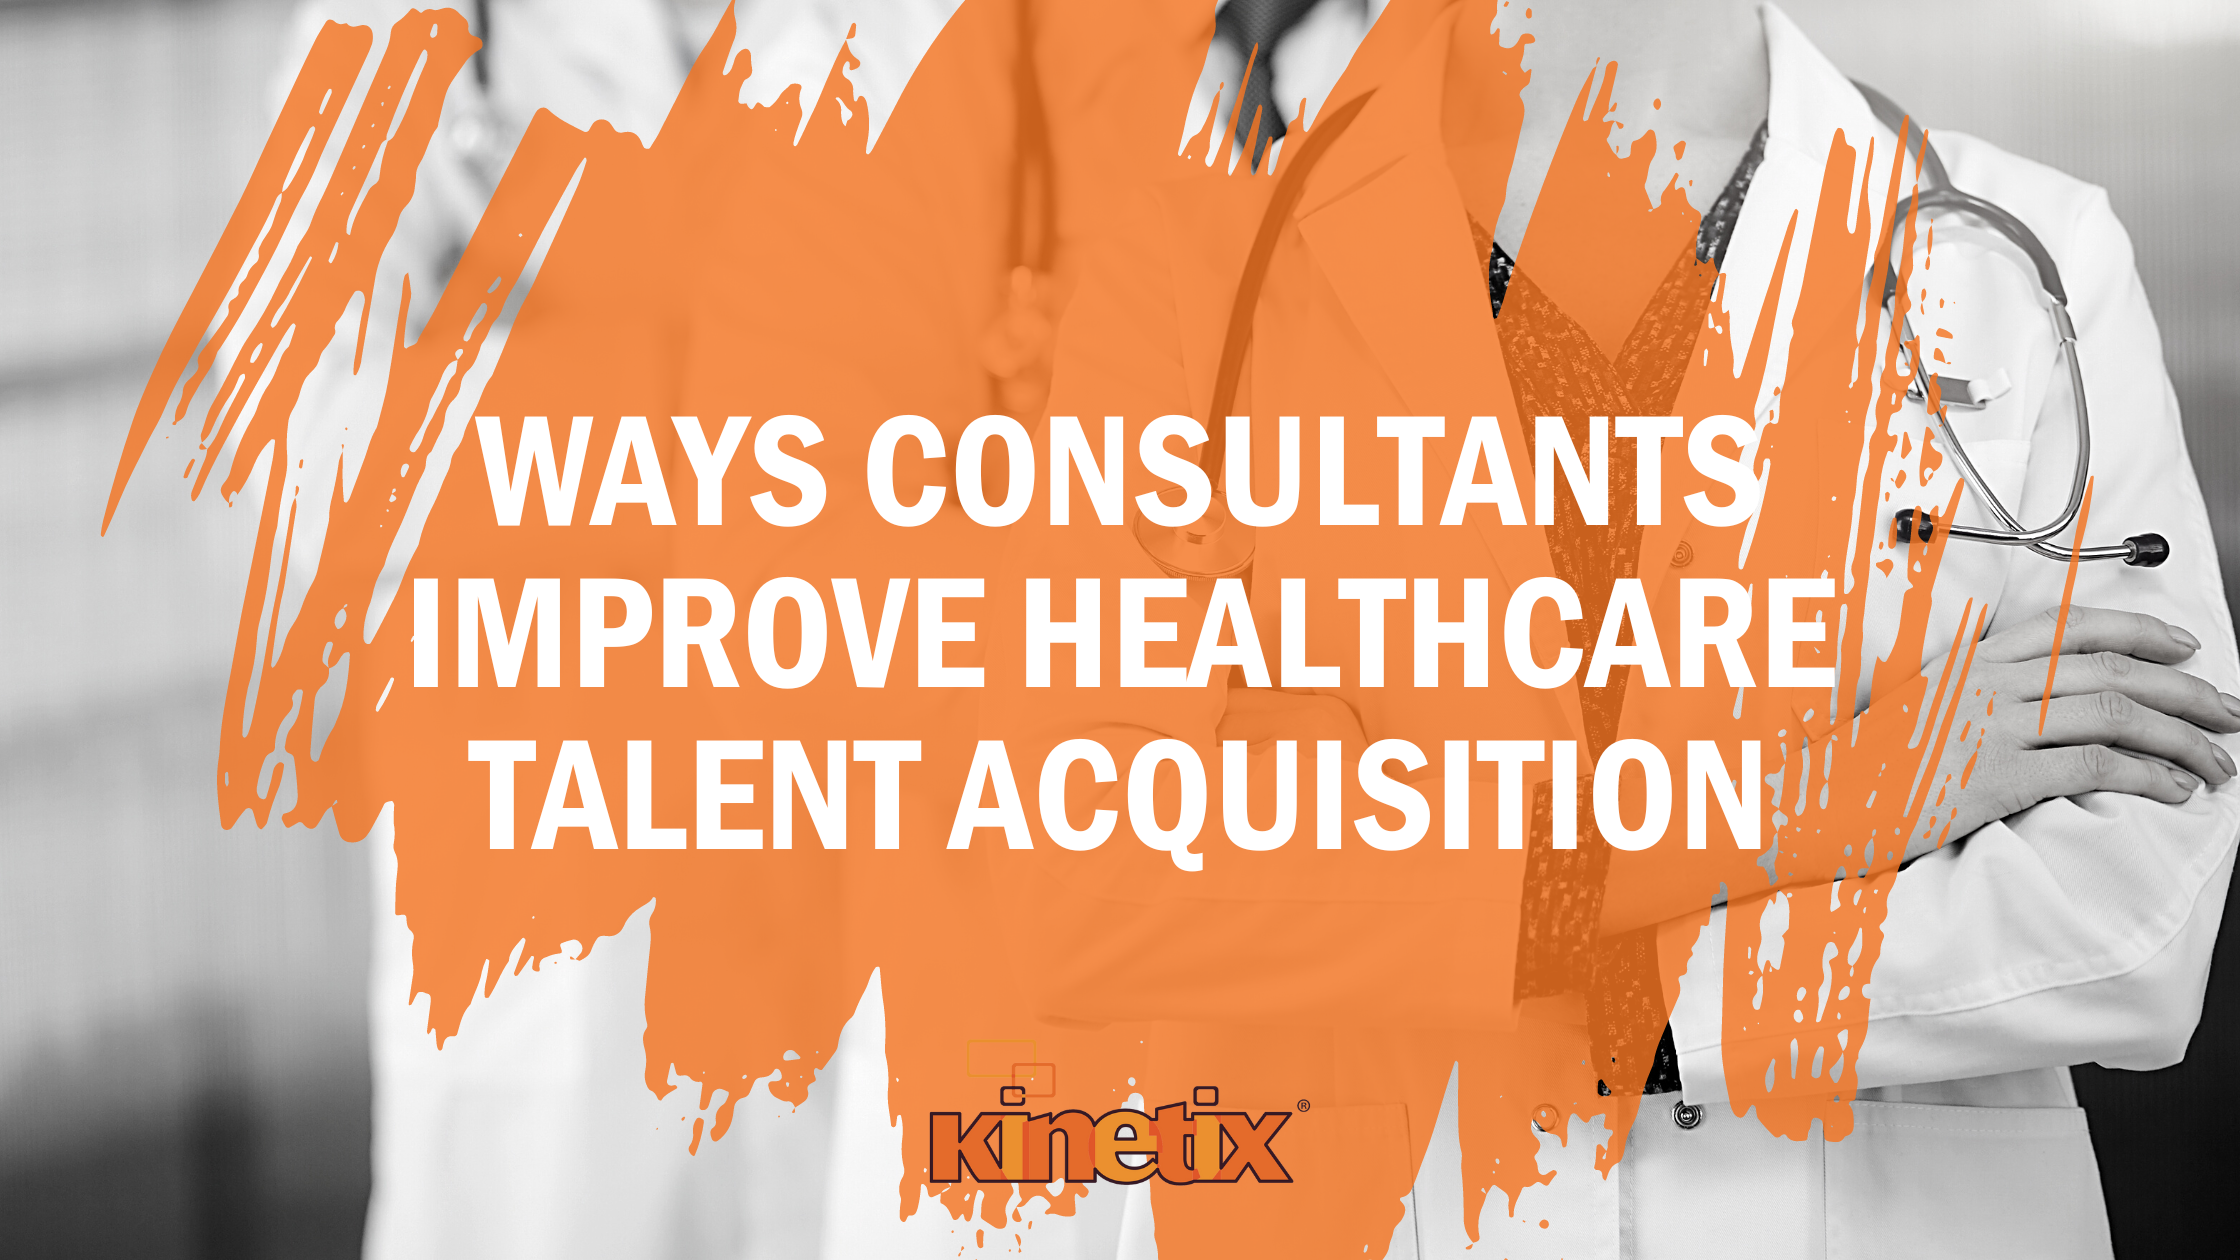 5 Ways Consultants Improve Healthcare Talent Acquisition